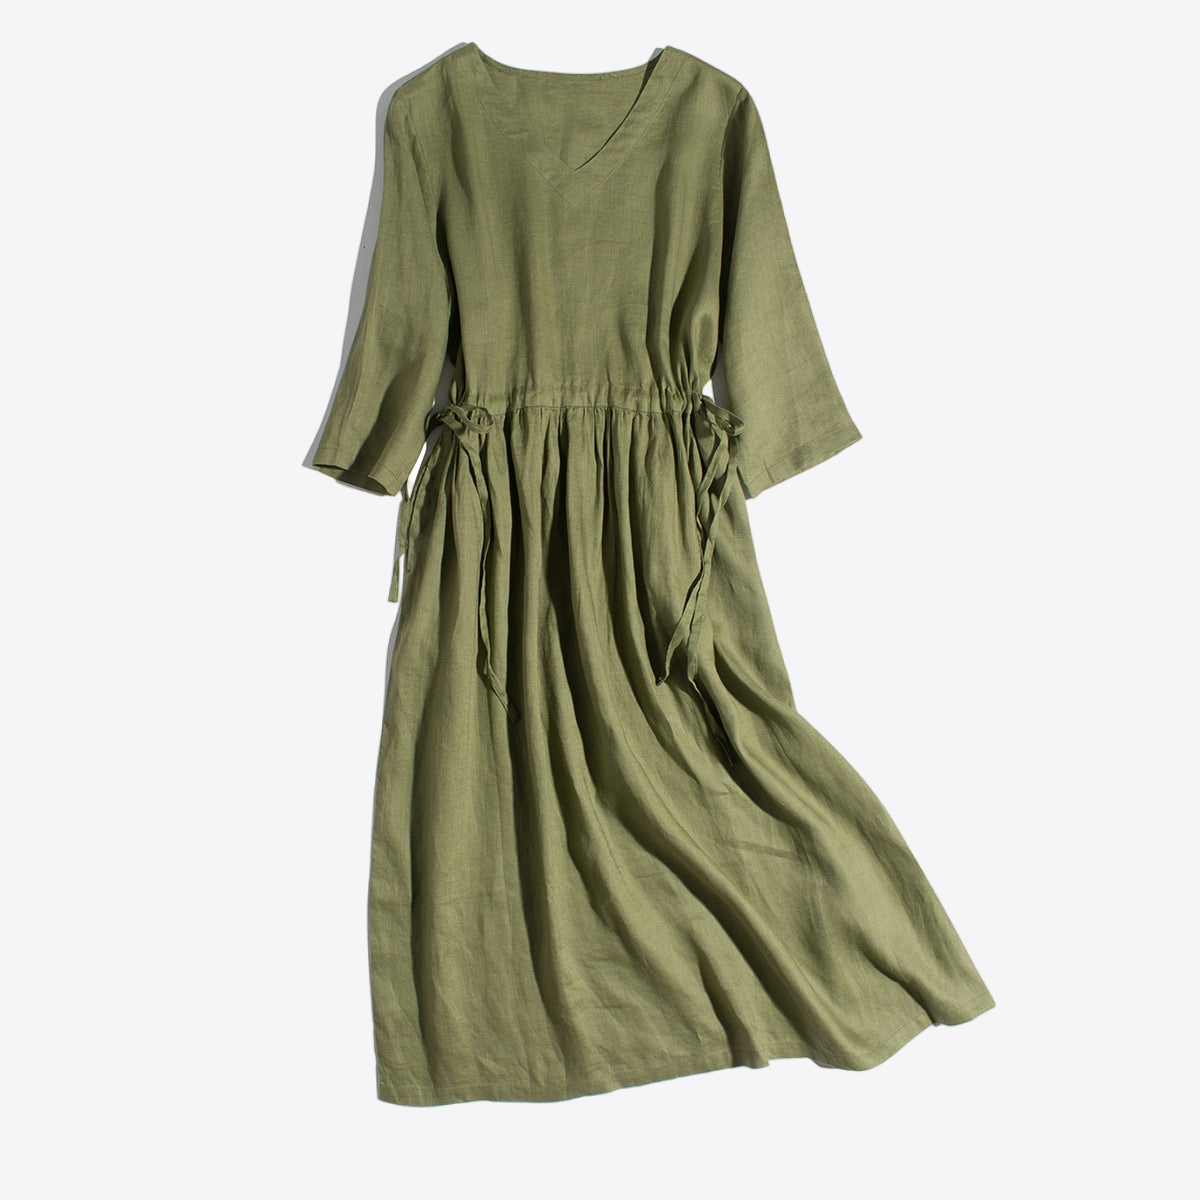 Earthy Essence 100% Linen Mini Dress | Hypoallergenic - Allergy Friendly - Naturally Free